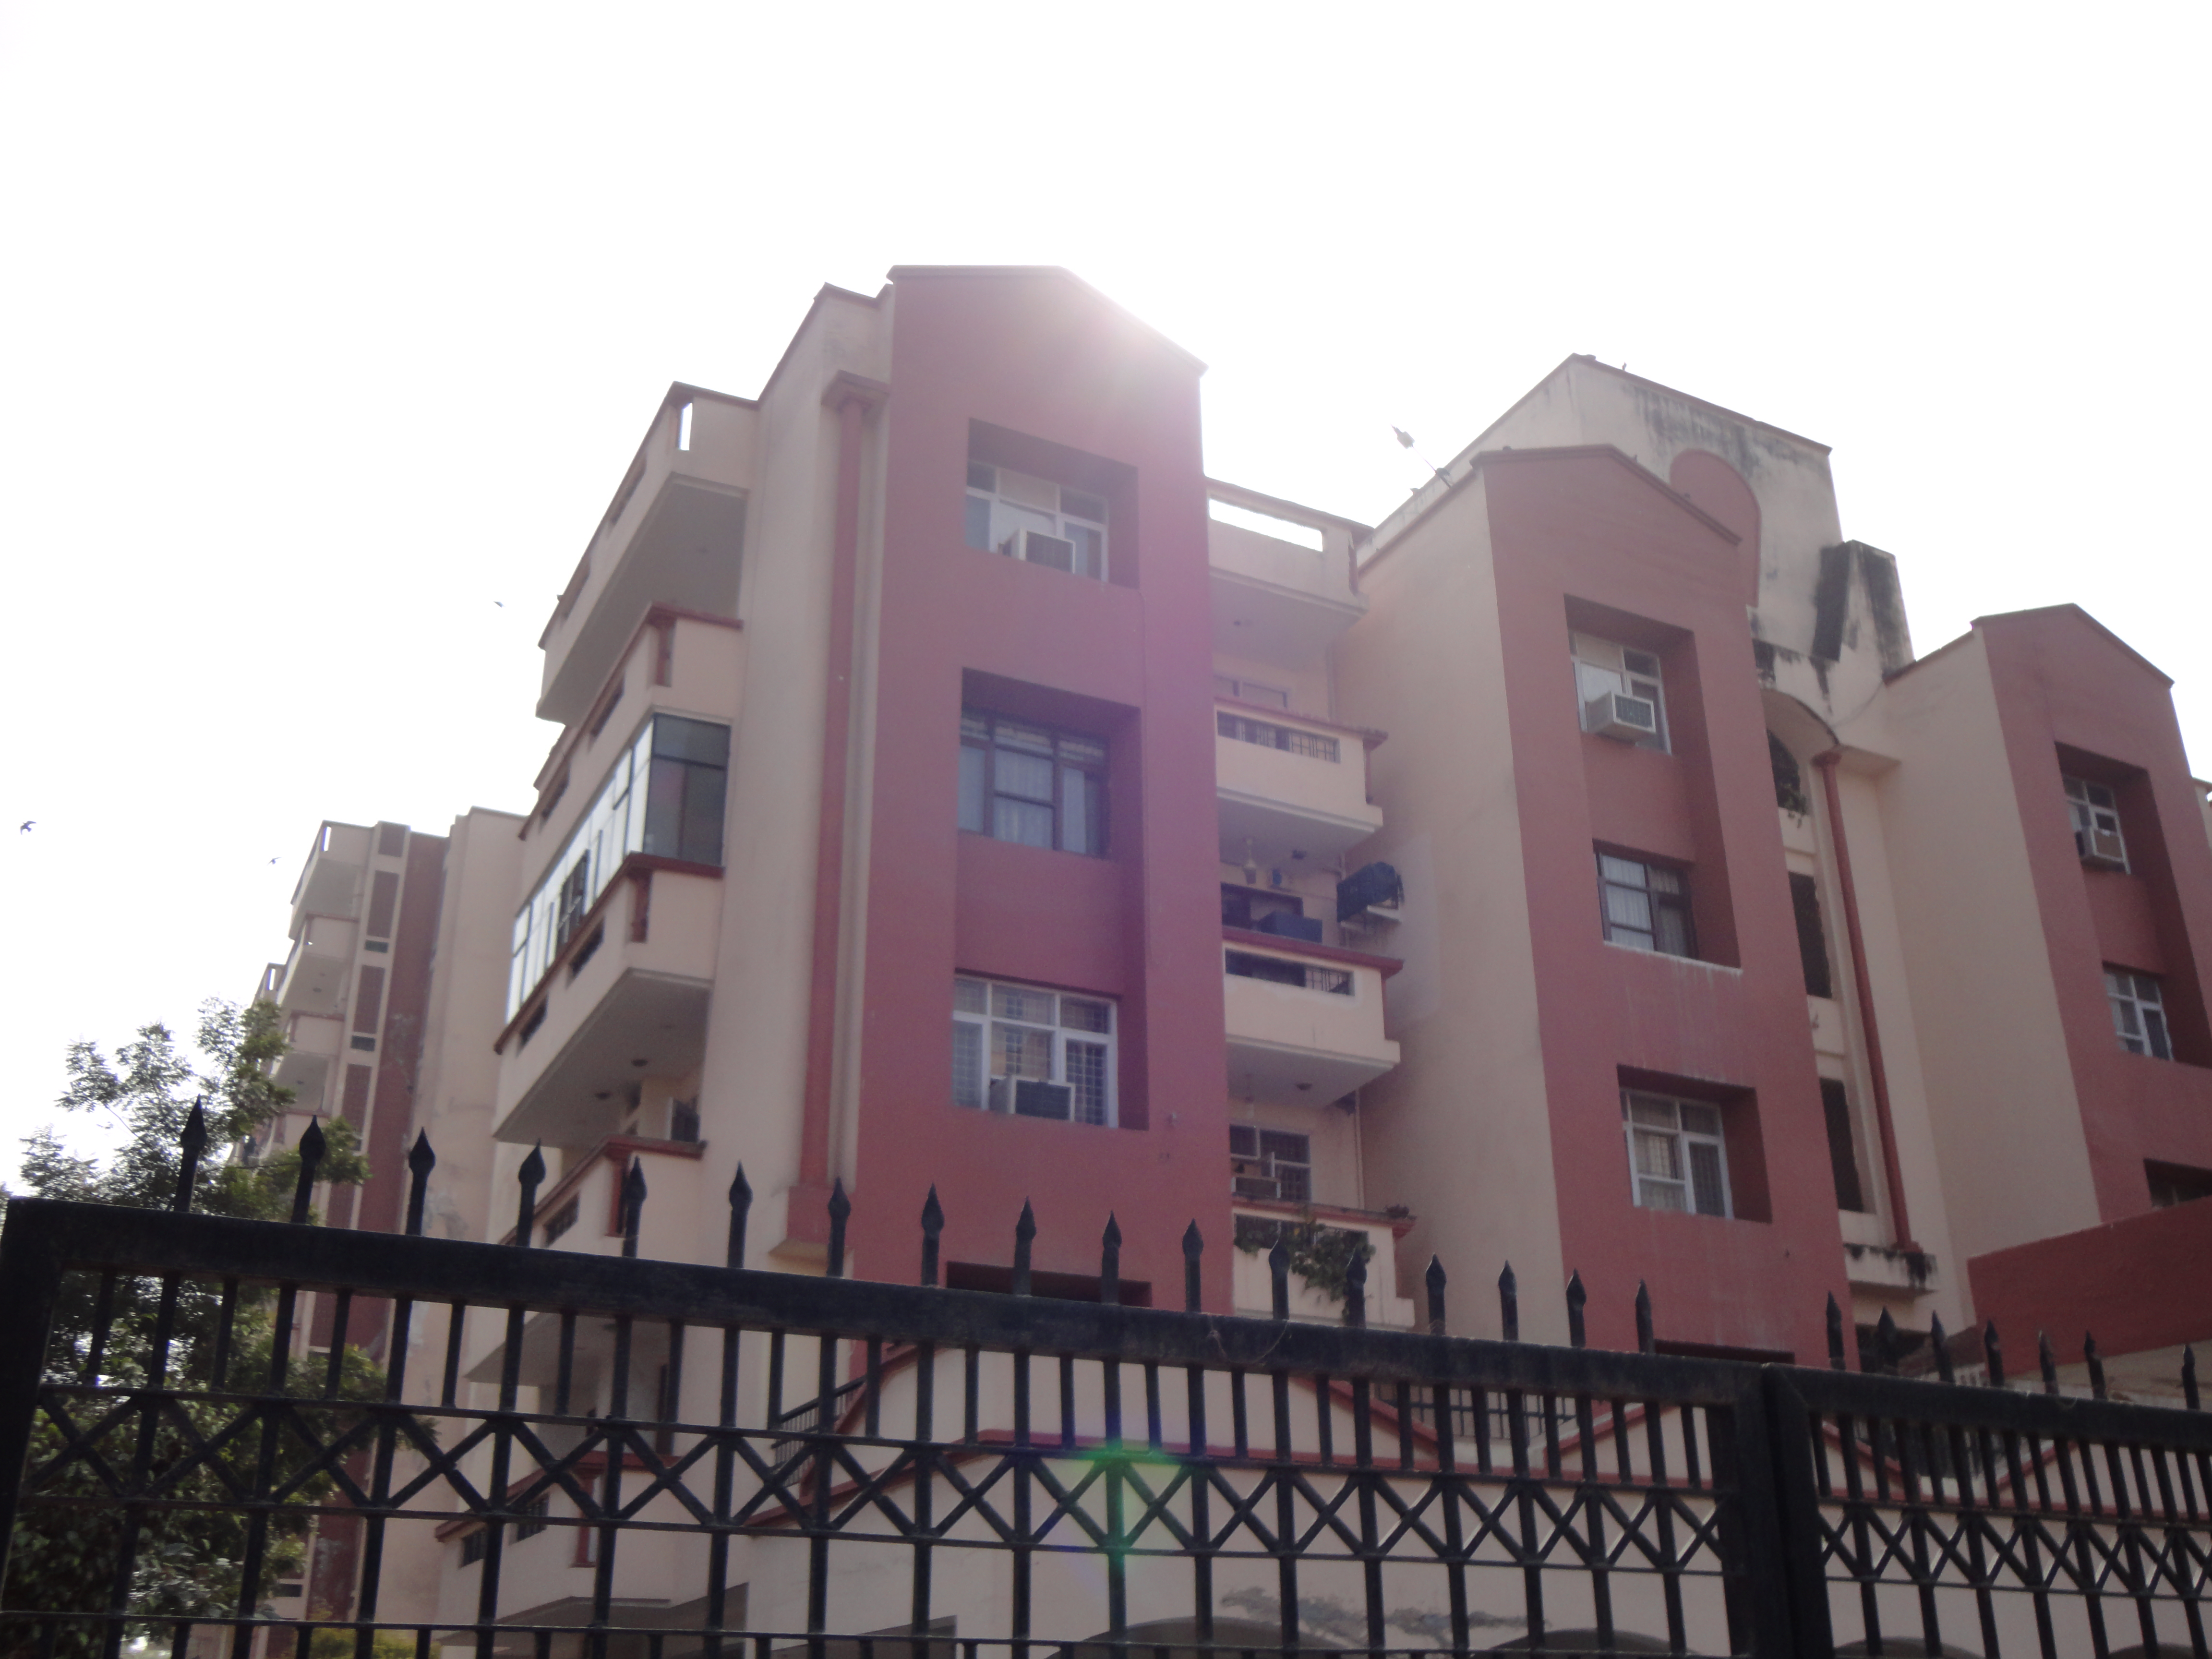 The Arihant Apartments CGHS Brochure Pdf Image